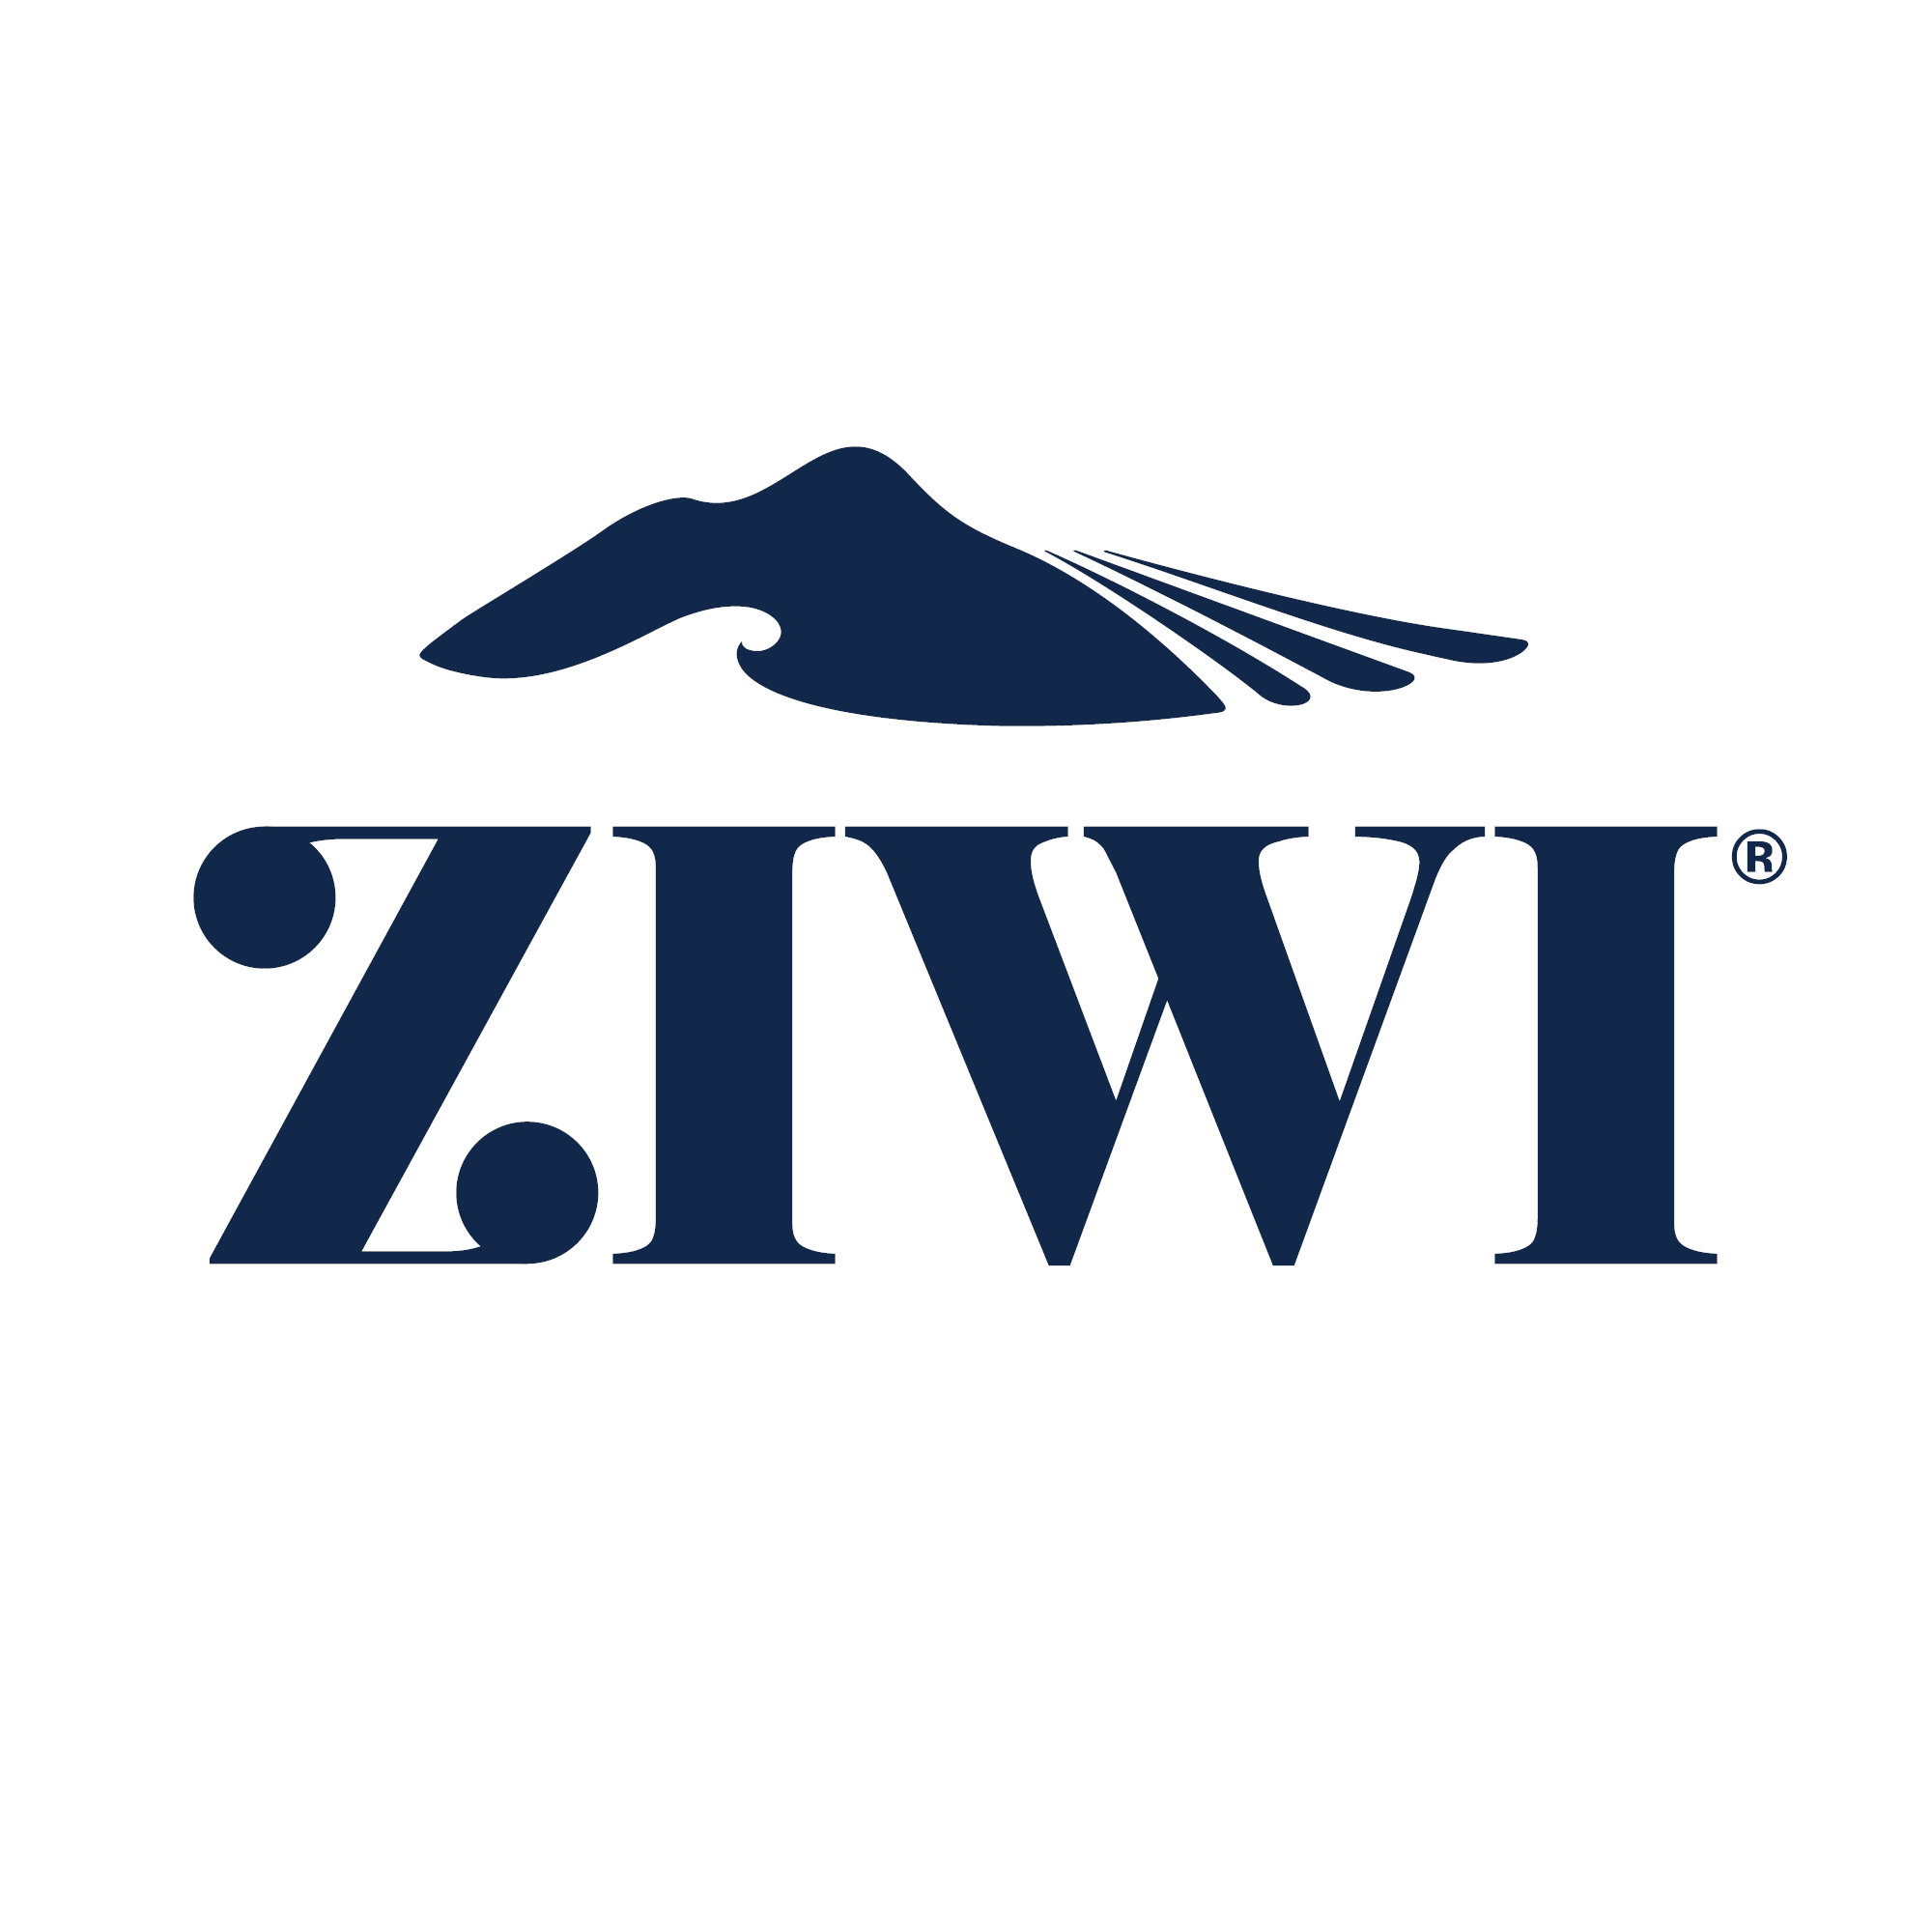 Ziwi Peak Logo